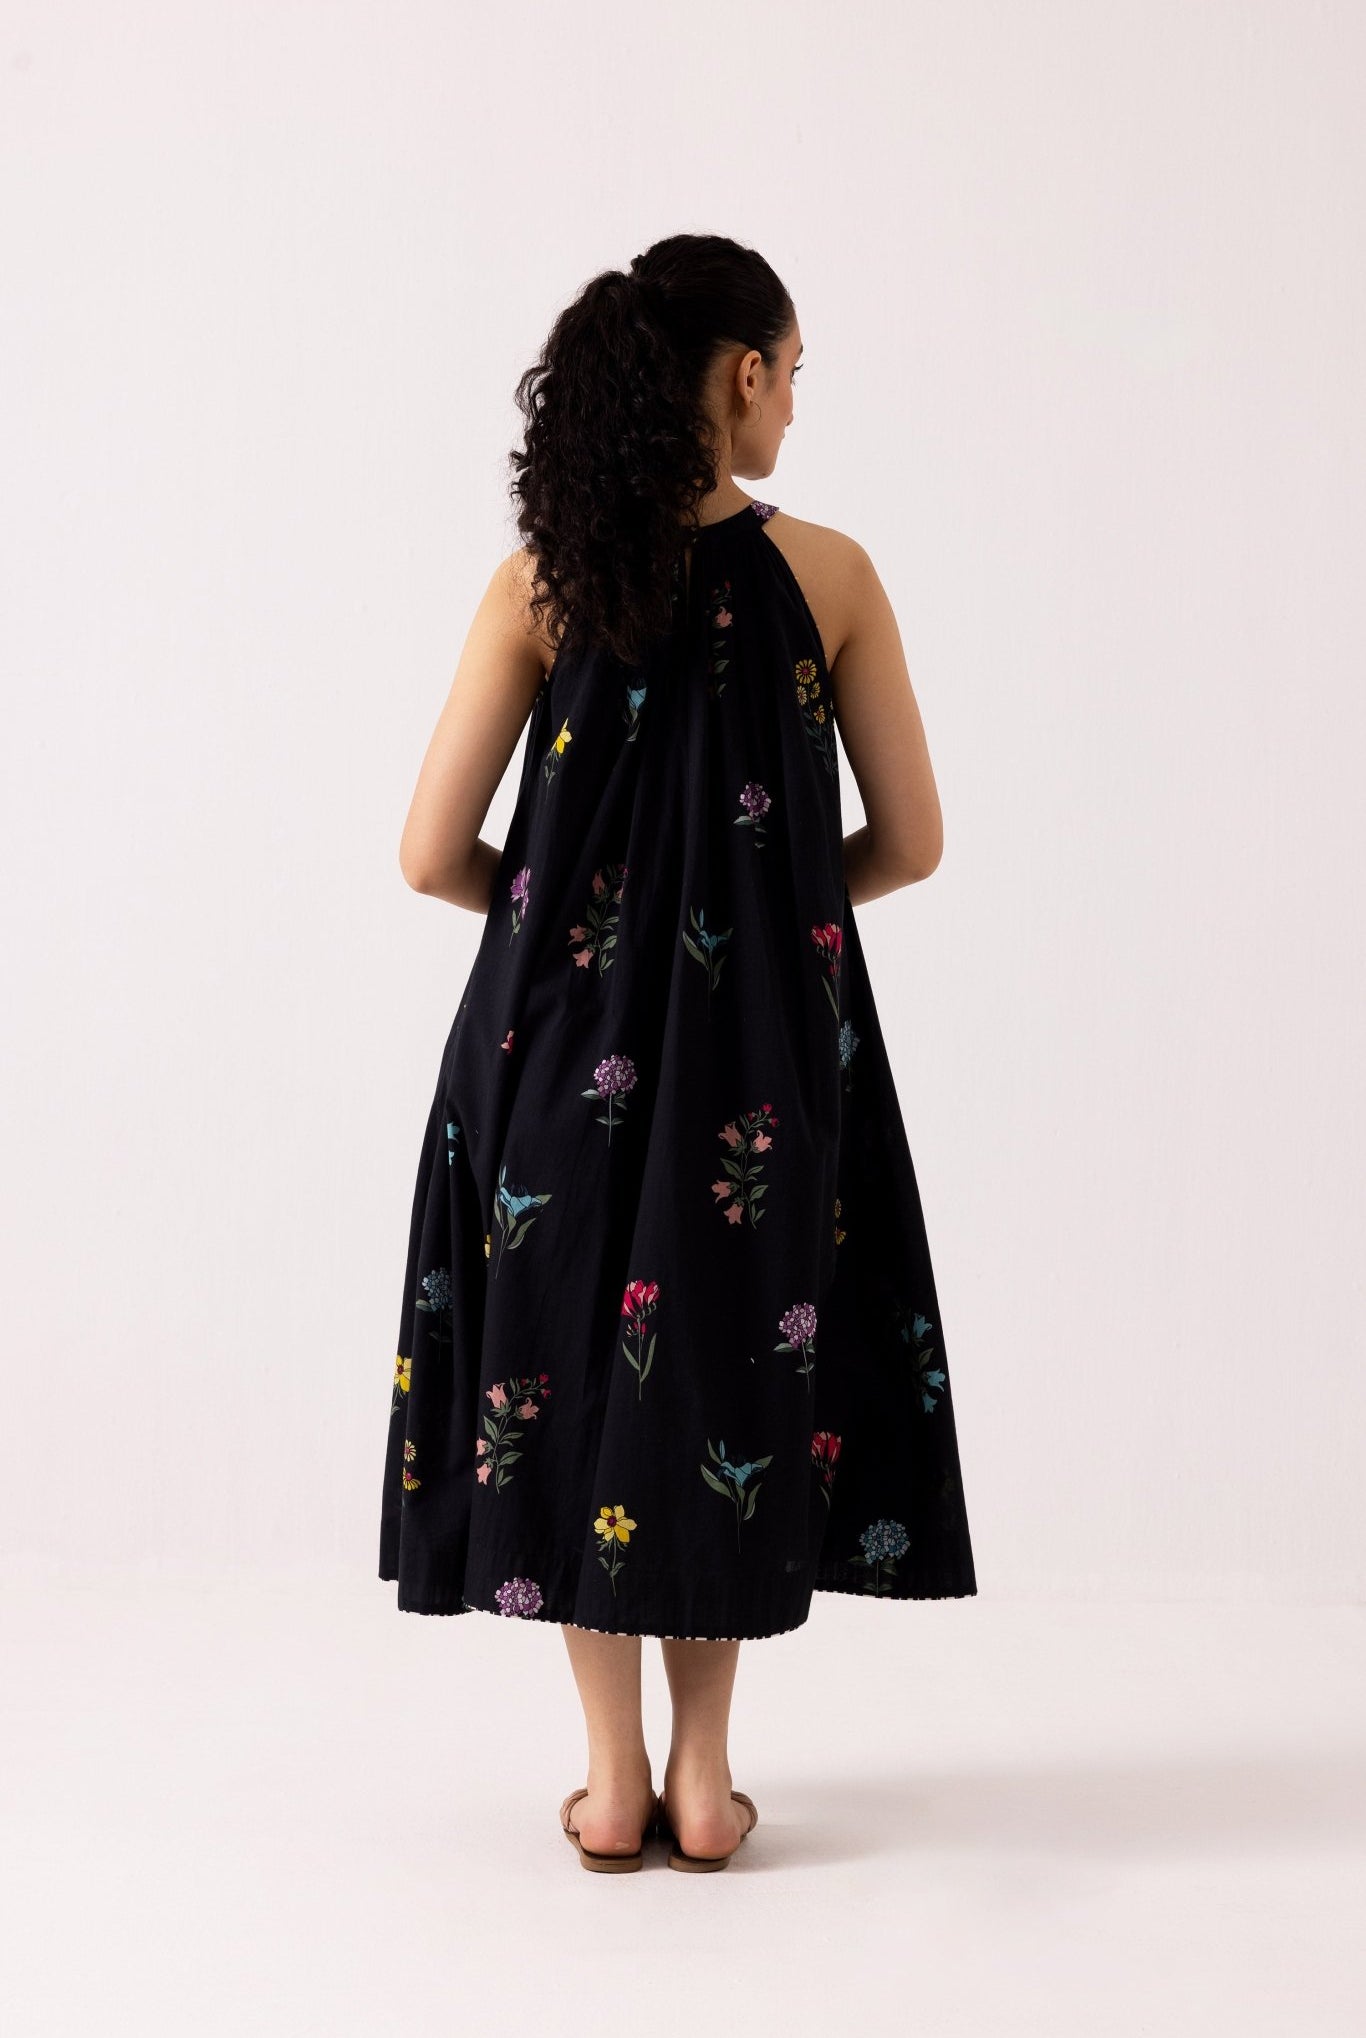 Camellia Dress - CiceroniJacket, DressLabel Shreya Sharma